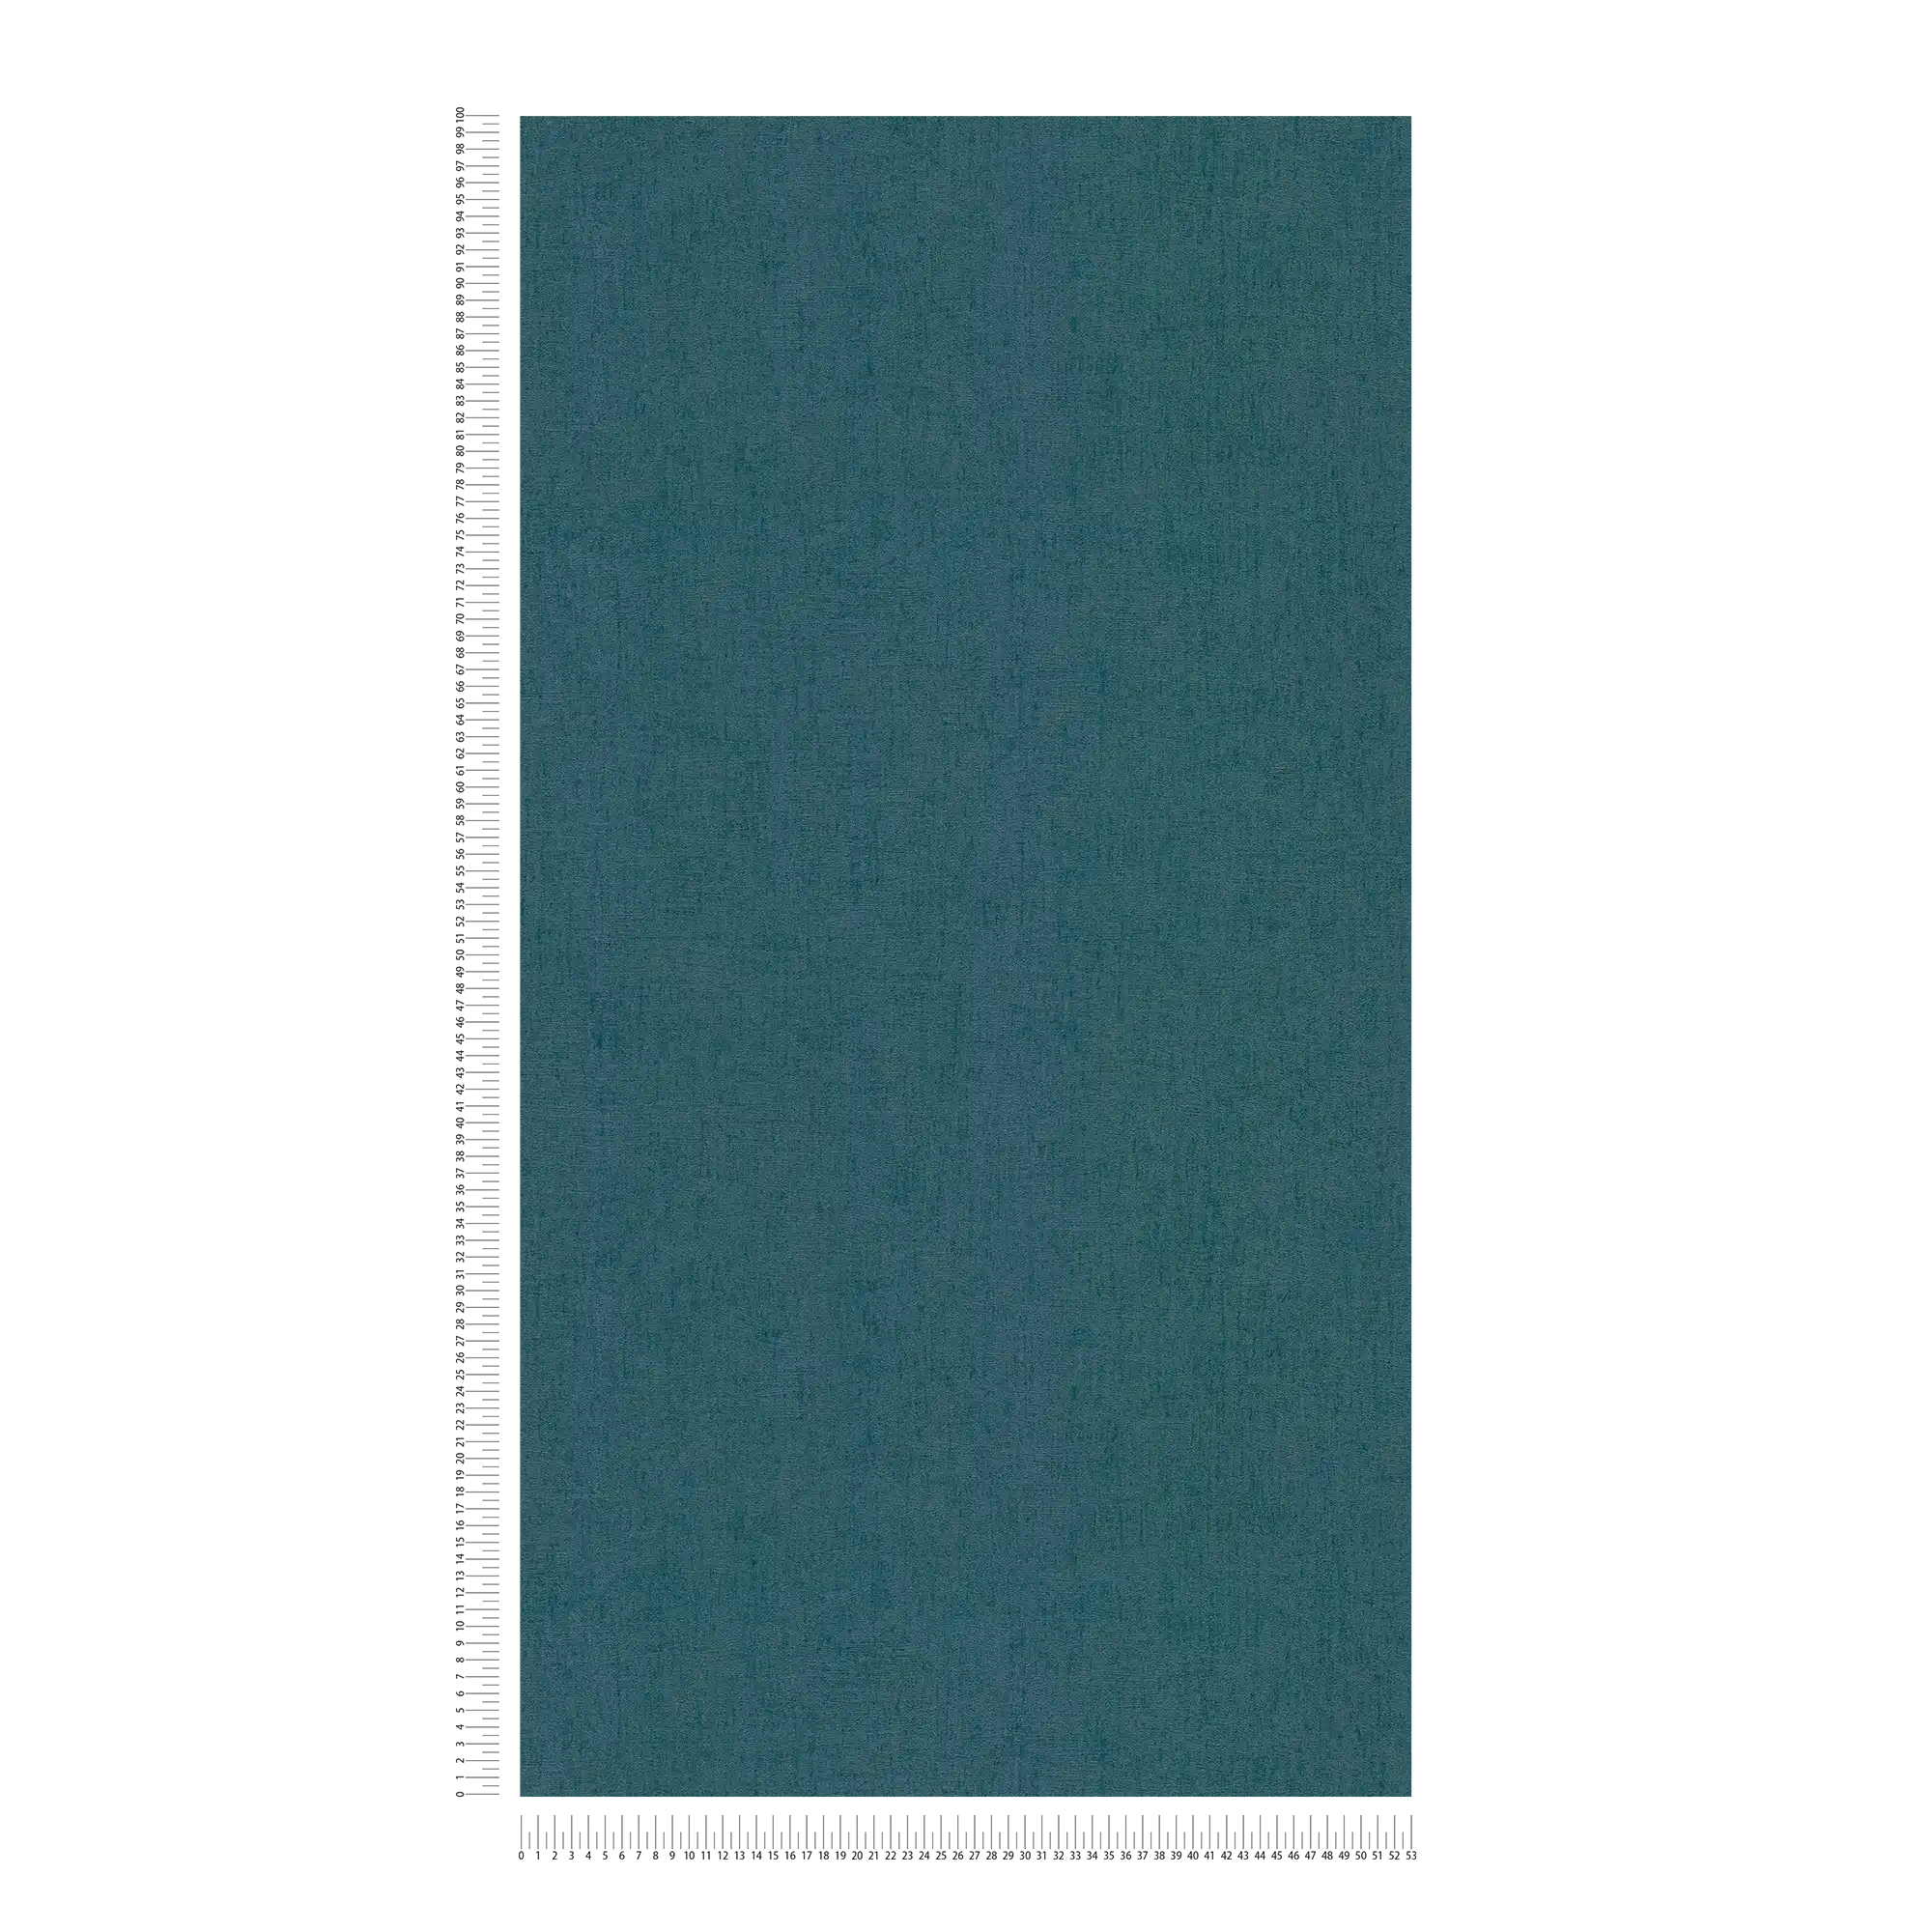             papel pintado texturizado gasolina con efecto brillo - azul, verde, metálico
        